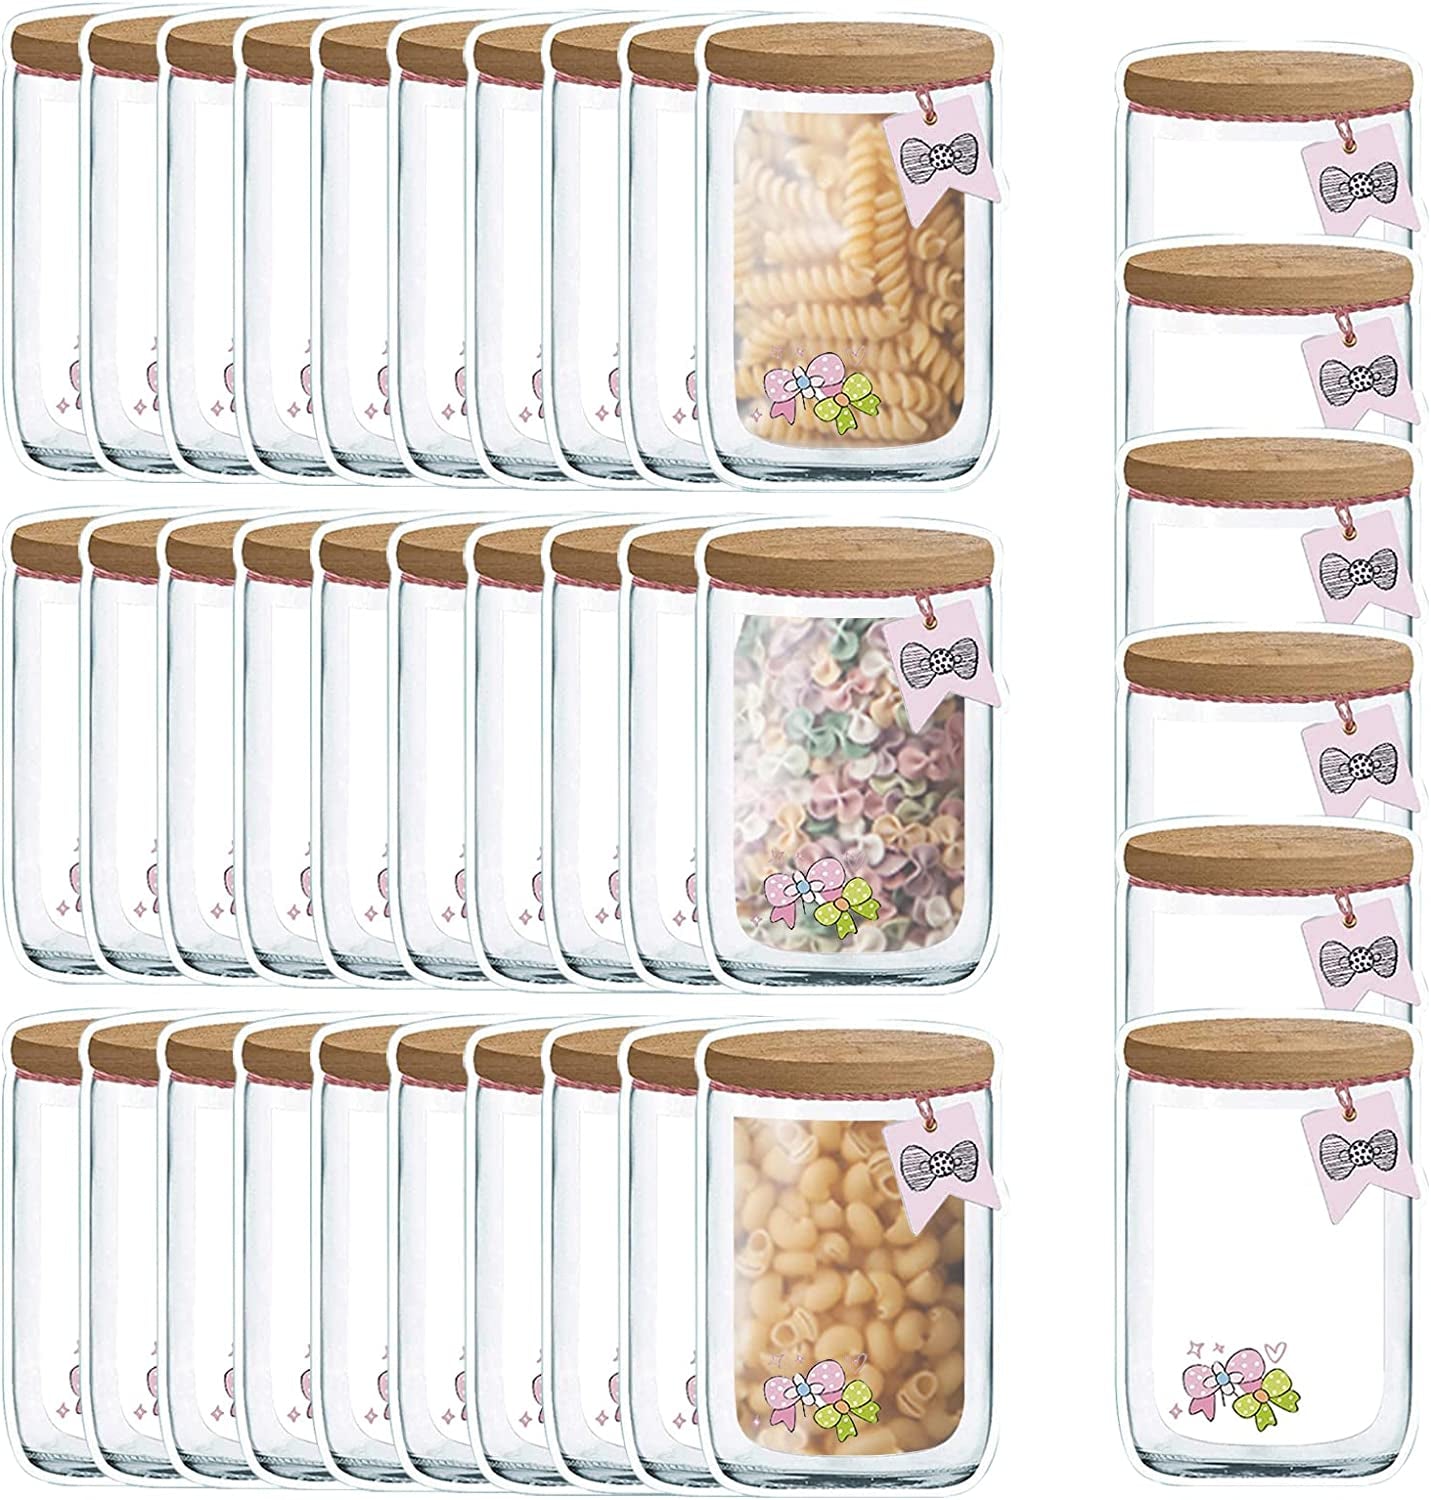 20 PCS Reusable Mason Jar Zipper Bags Mason Jar Bag Refrigerator Organizer Stand-Up Airtight Seal Saver Bags Food Storage Sandwich Bags for Kitchen Kids Snack